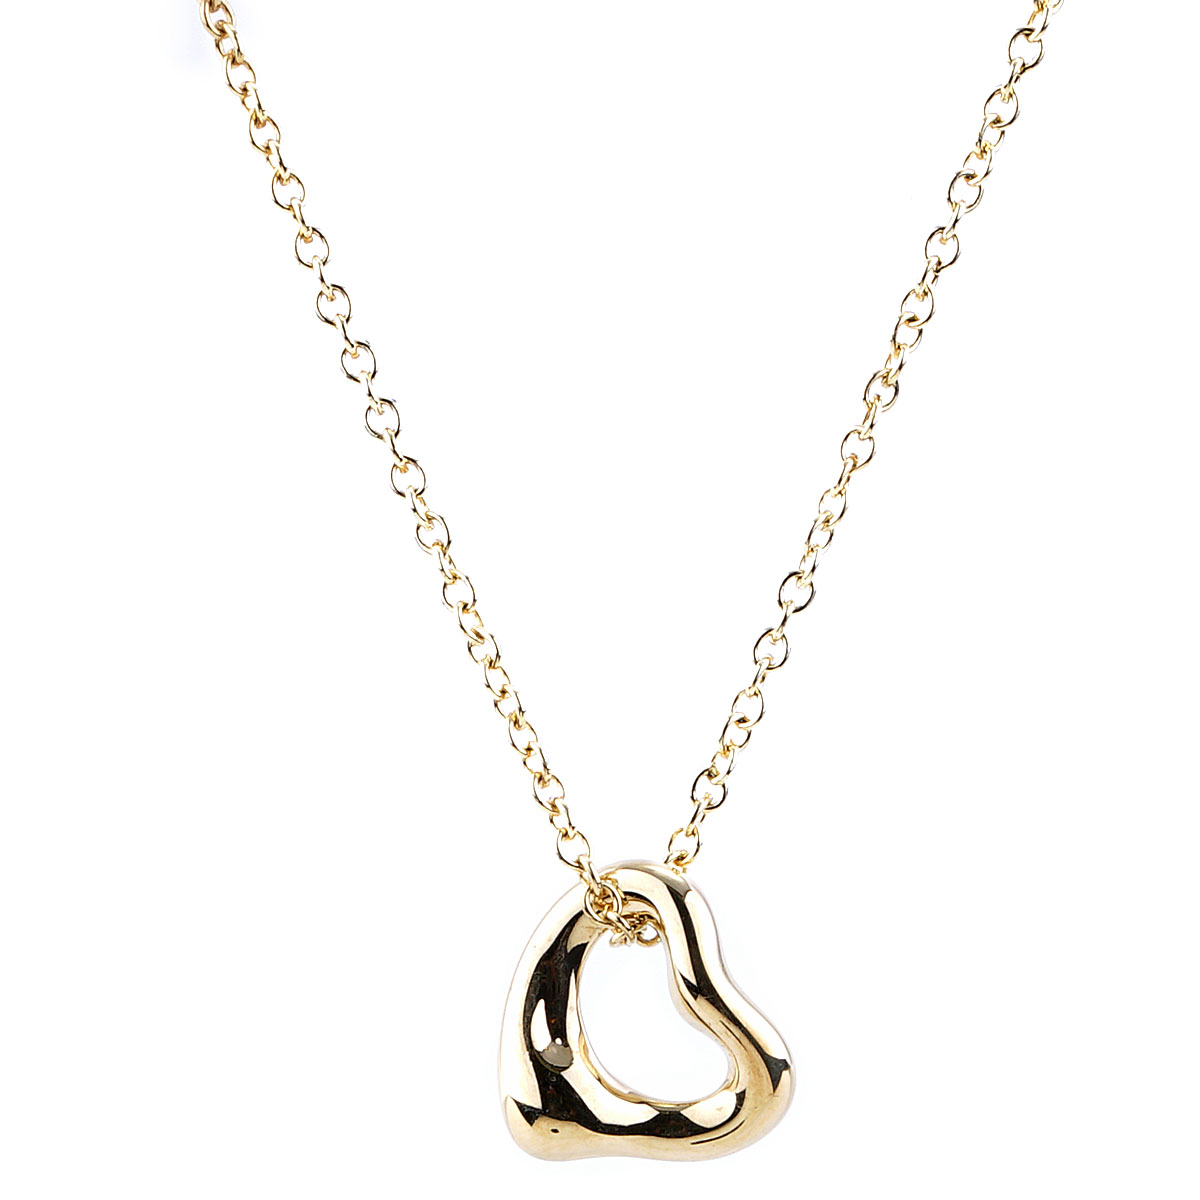 14k Yellow Gold Petite Heart Pendant Necklace, 18